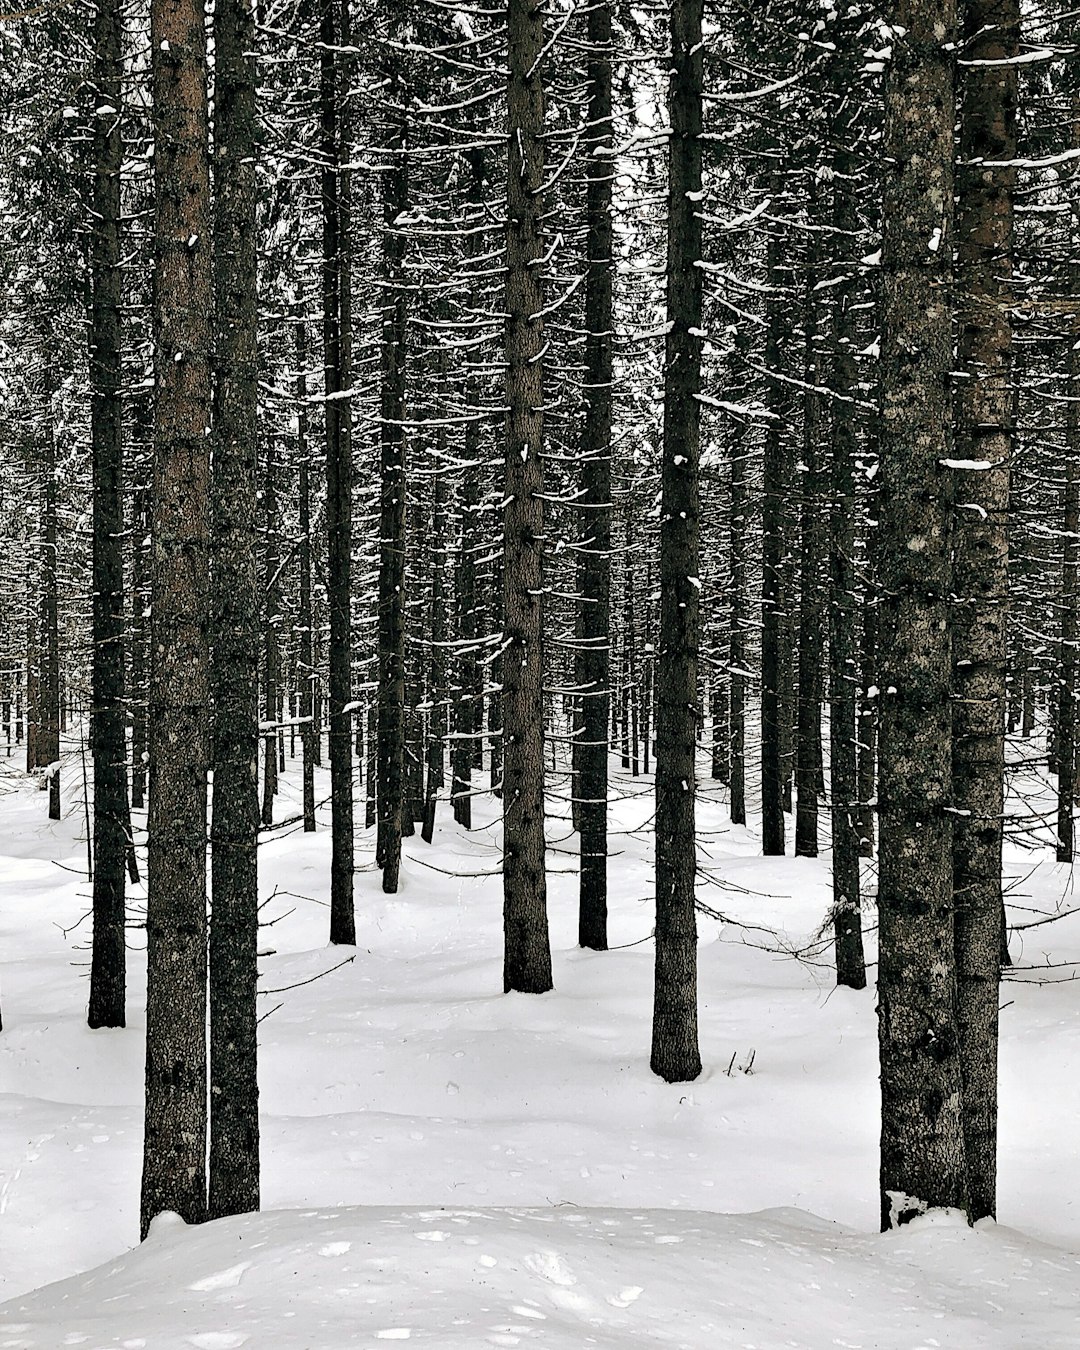 Spruce-fir forest photo spot Paneveggio - Pale di San Martino Zillertal Alps